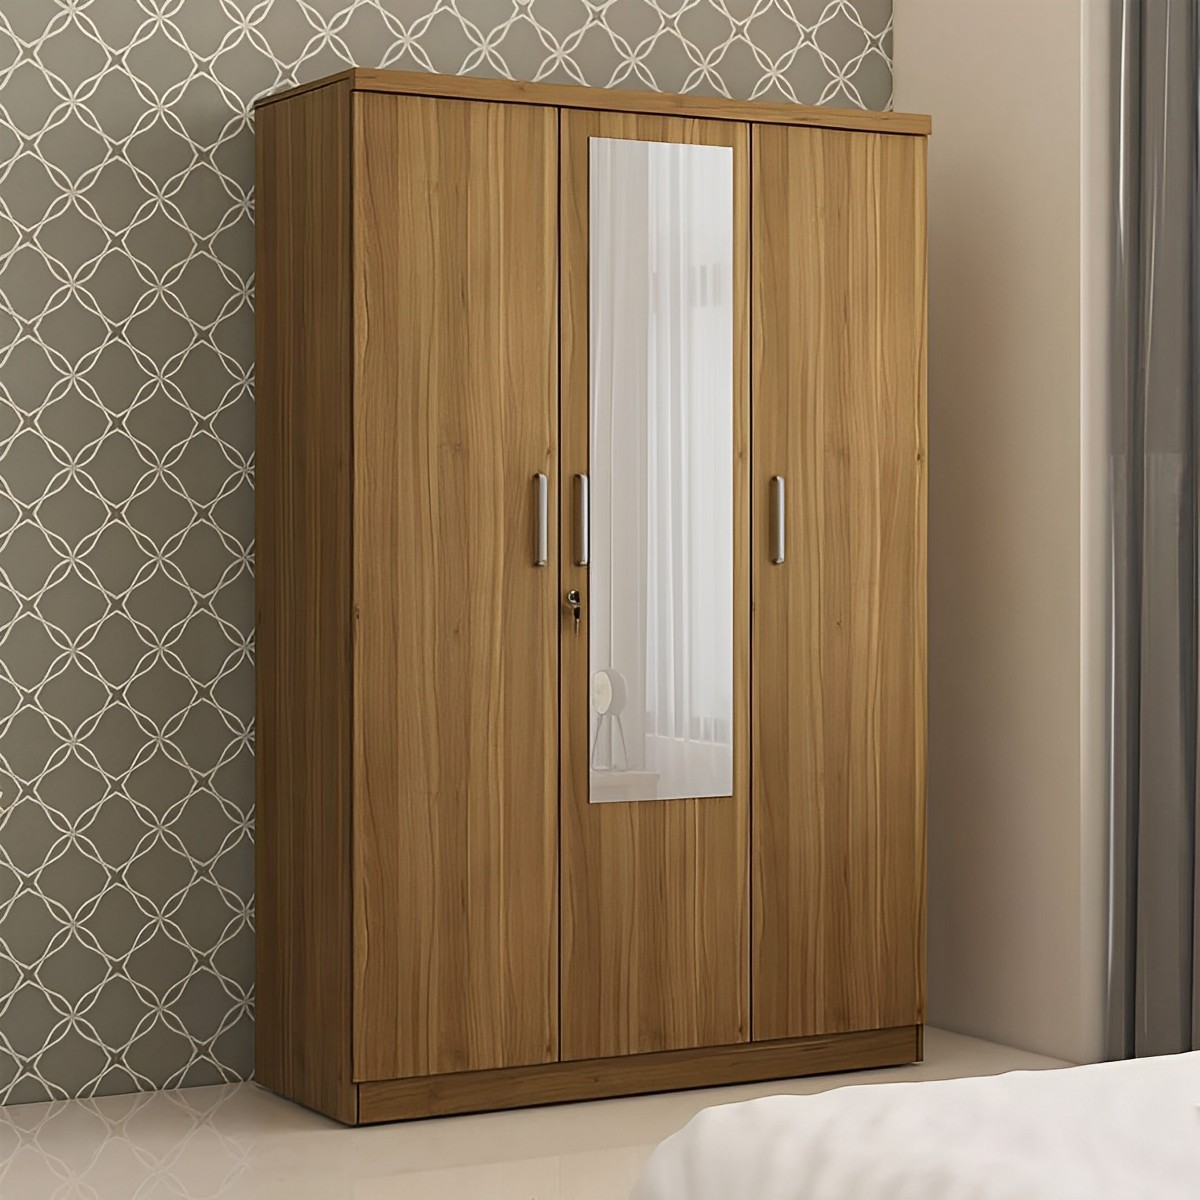  Buy a Triple Door Engineered Wood Wardrobe Upto 65% off